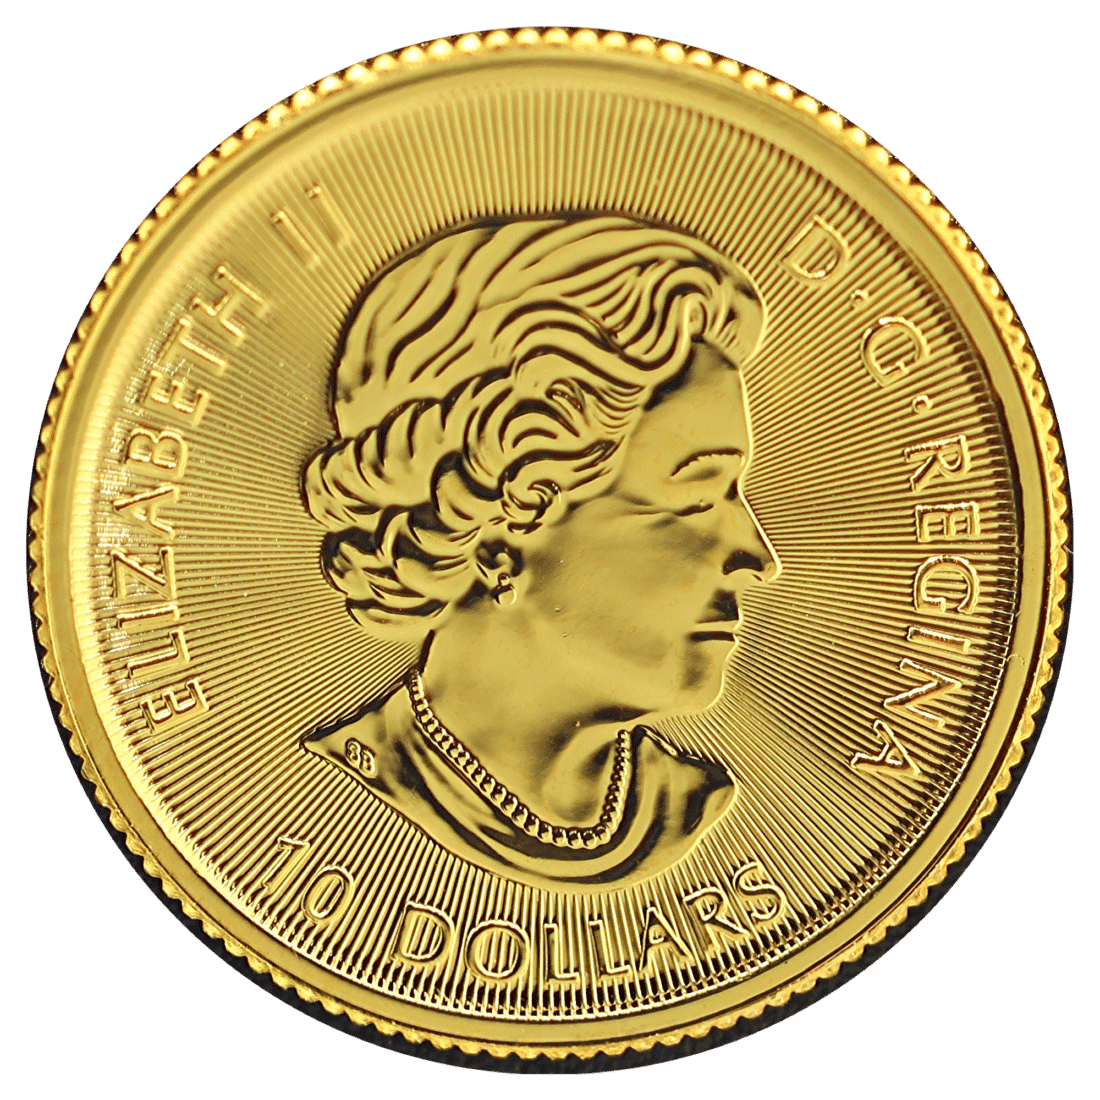 Gold Canadian Lucky Dragon Coin 2019